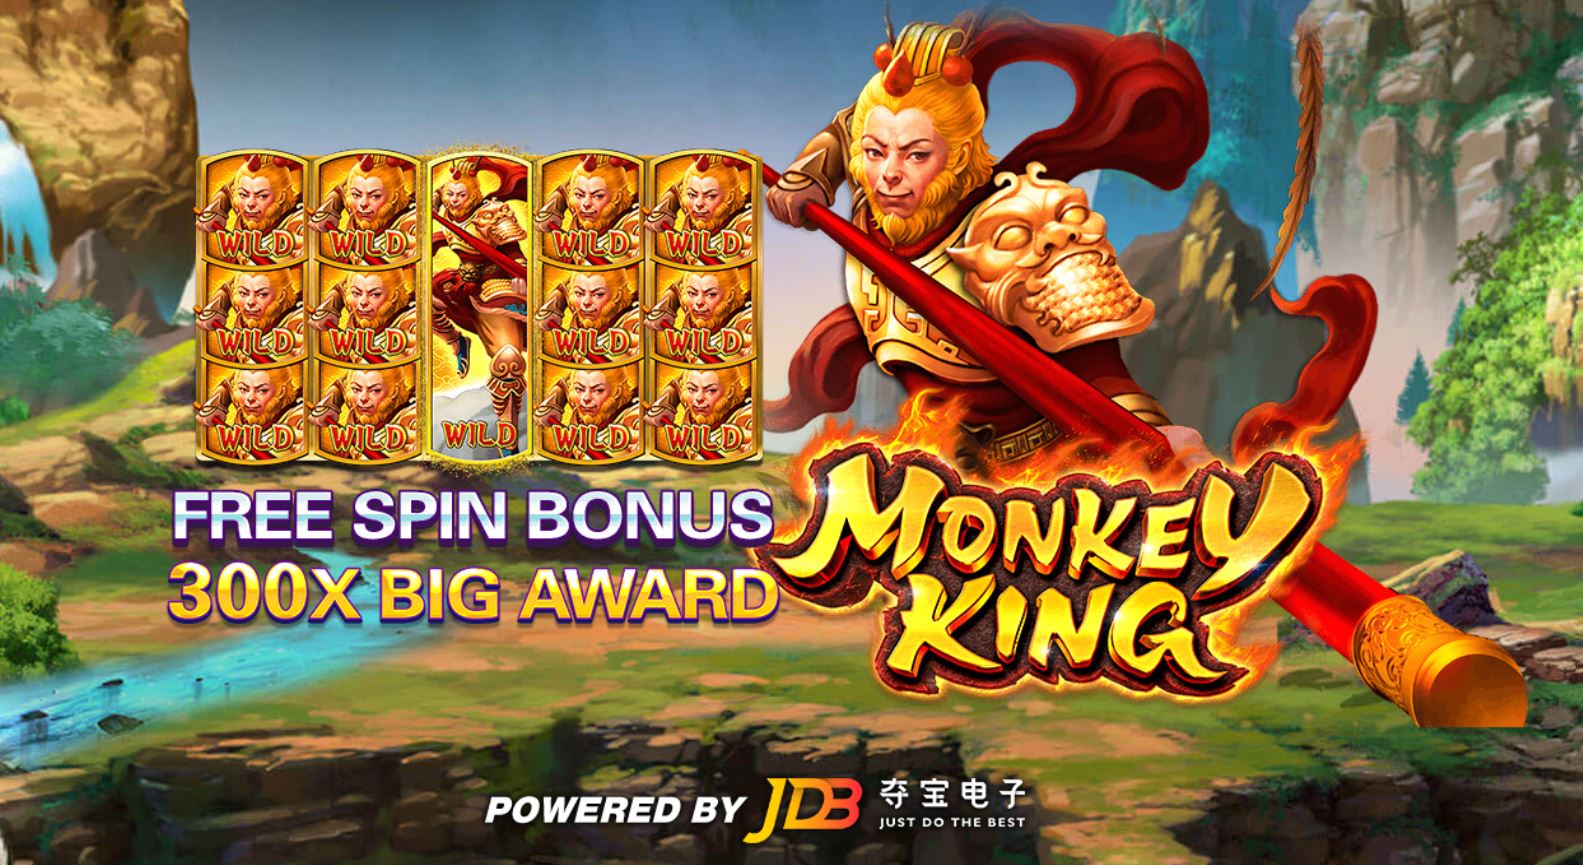 slot สล็อต JDB Monkey King - เปลี่ยนคาถาไวด์เพื่อให้คุณชนะเรื่อยๆ ลงทะเบียนรับทันที200 pay69 3